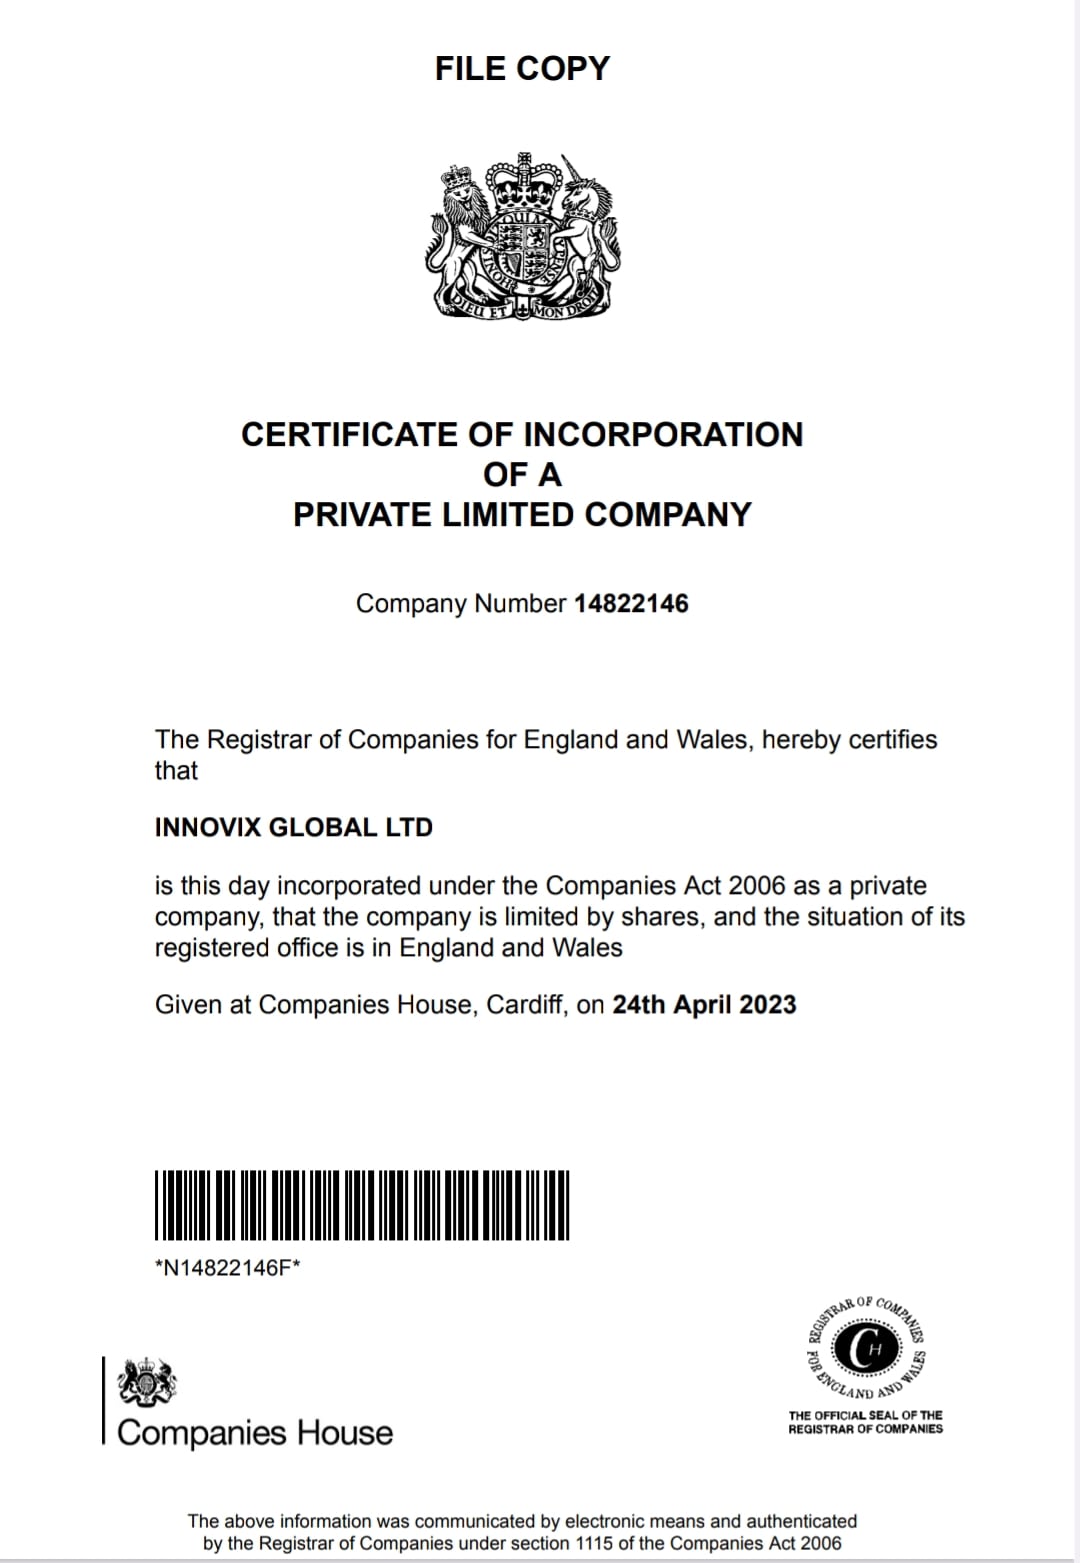 www.innovixinvestment.ltd  certificate